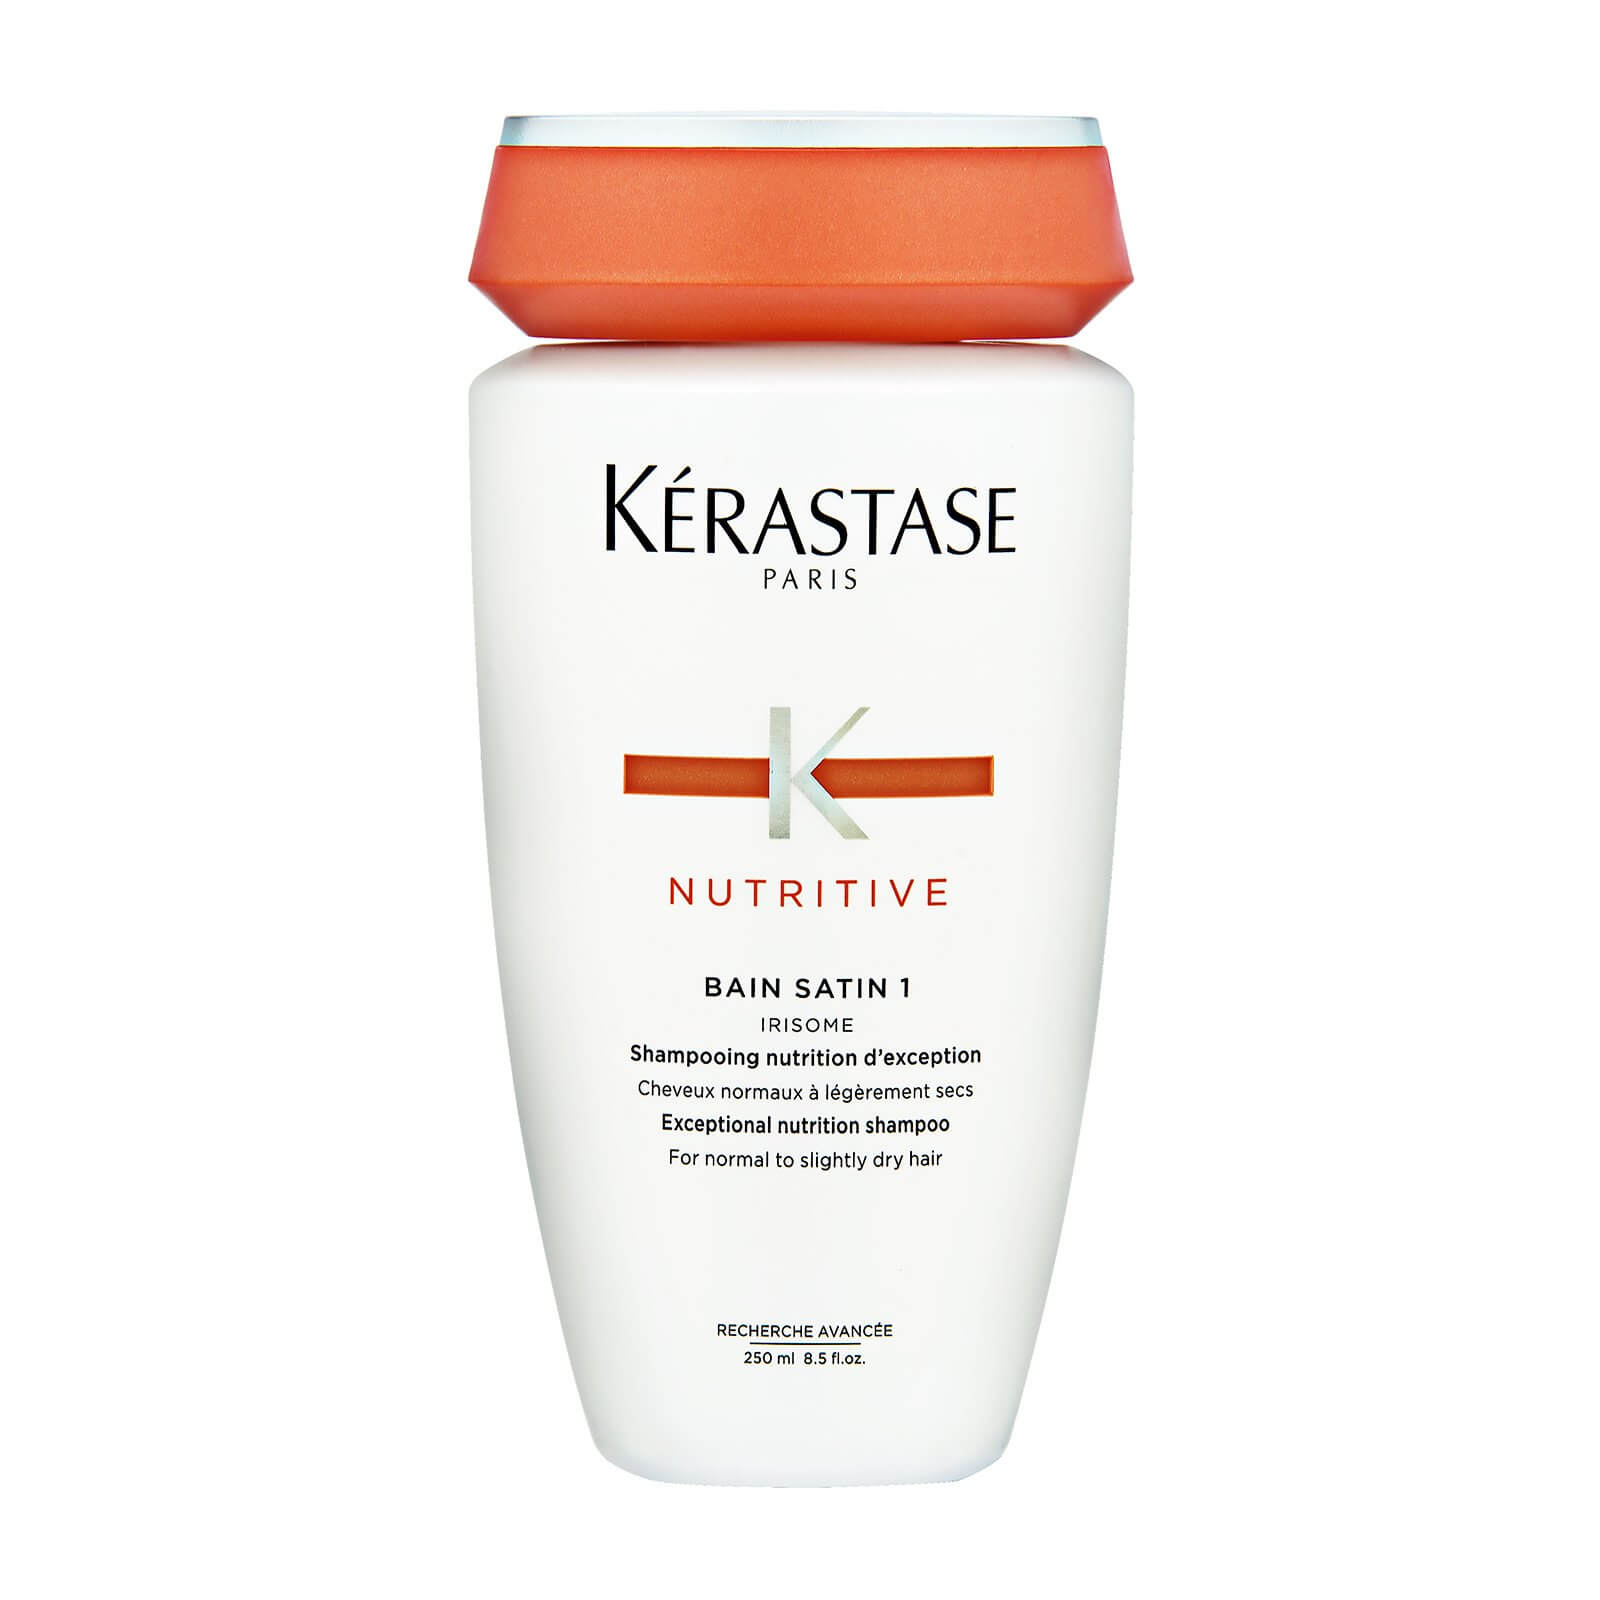 Kérastase Paris Bain Satin 1 Irisome Exceptional Nutrition Shampoo (For Normal To Slightly Dry Hair)250 ml 8.5 oz kalista Beauty